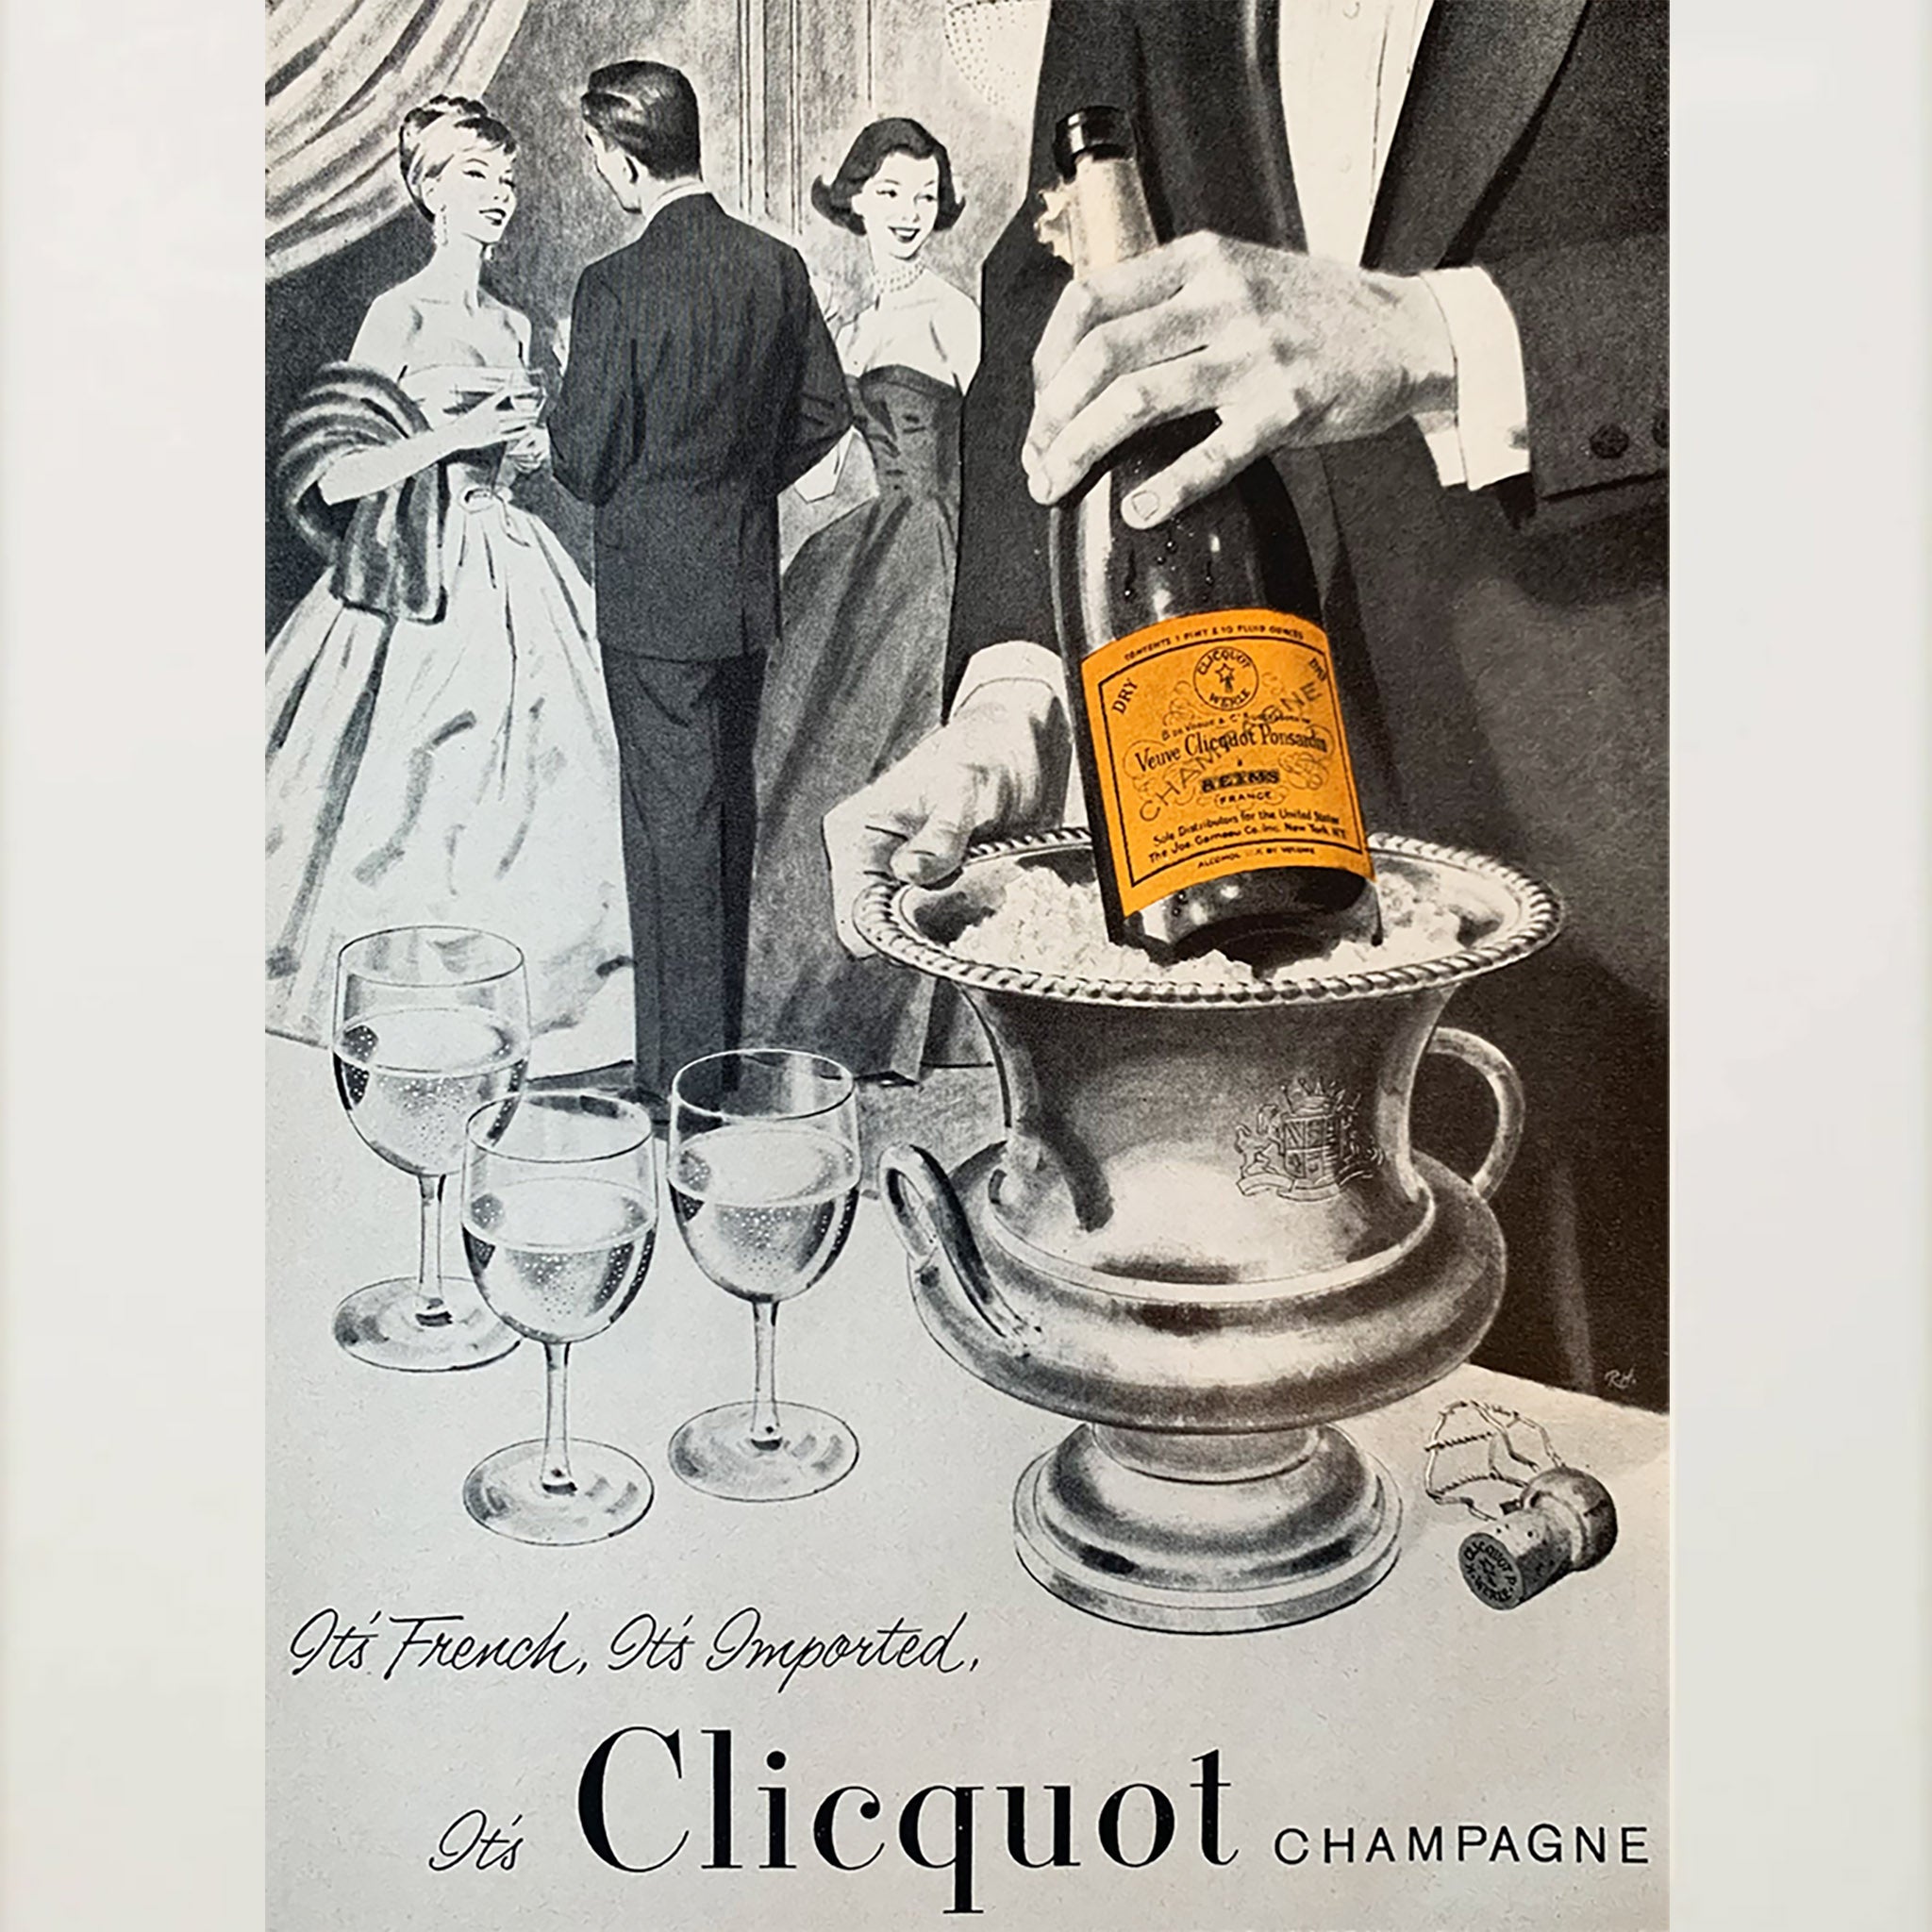 Framed Veuve Clicquot Champagne Advertisement